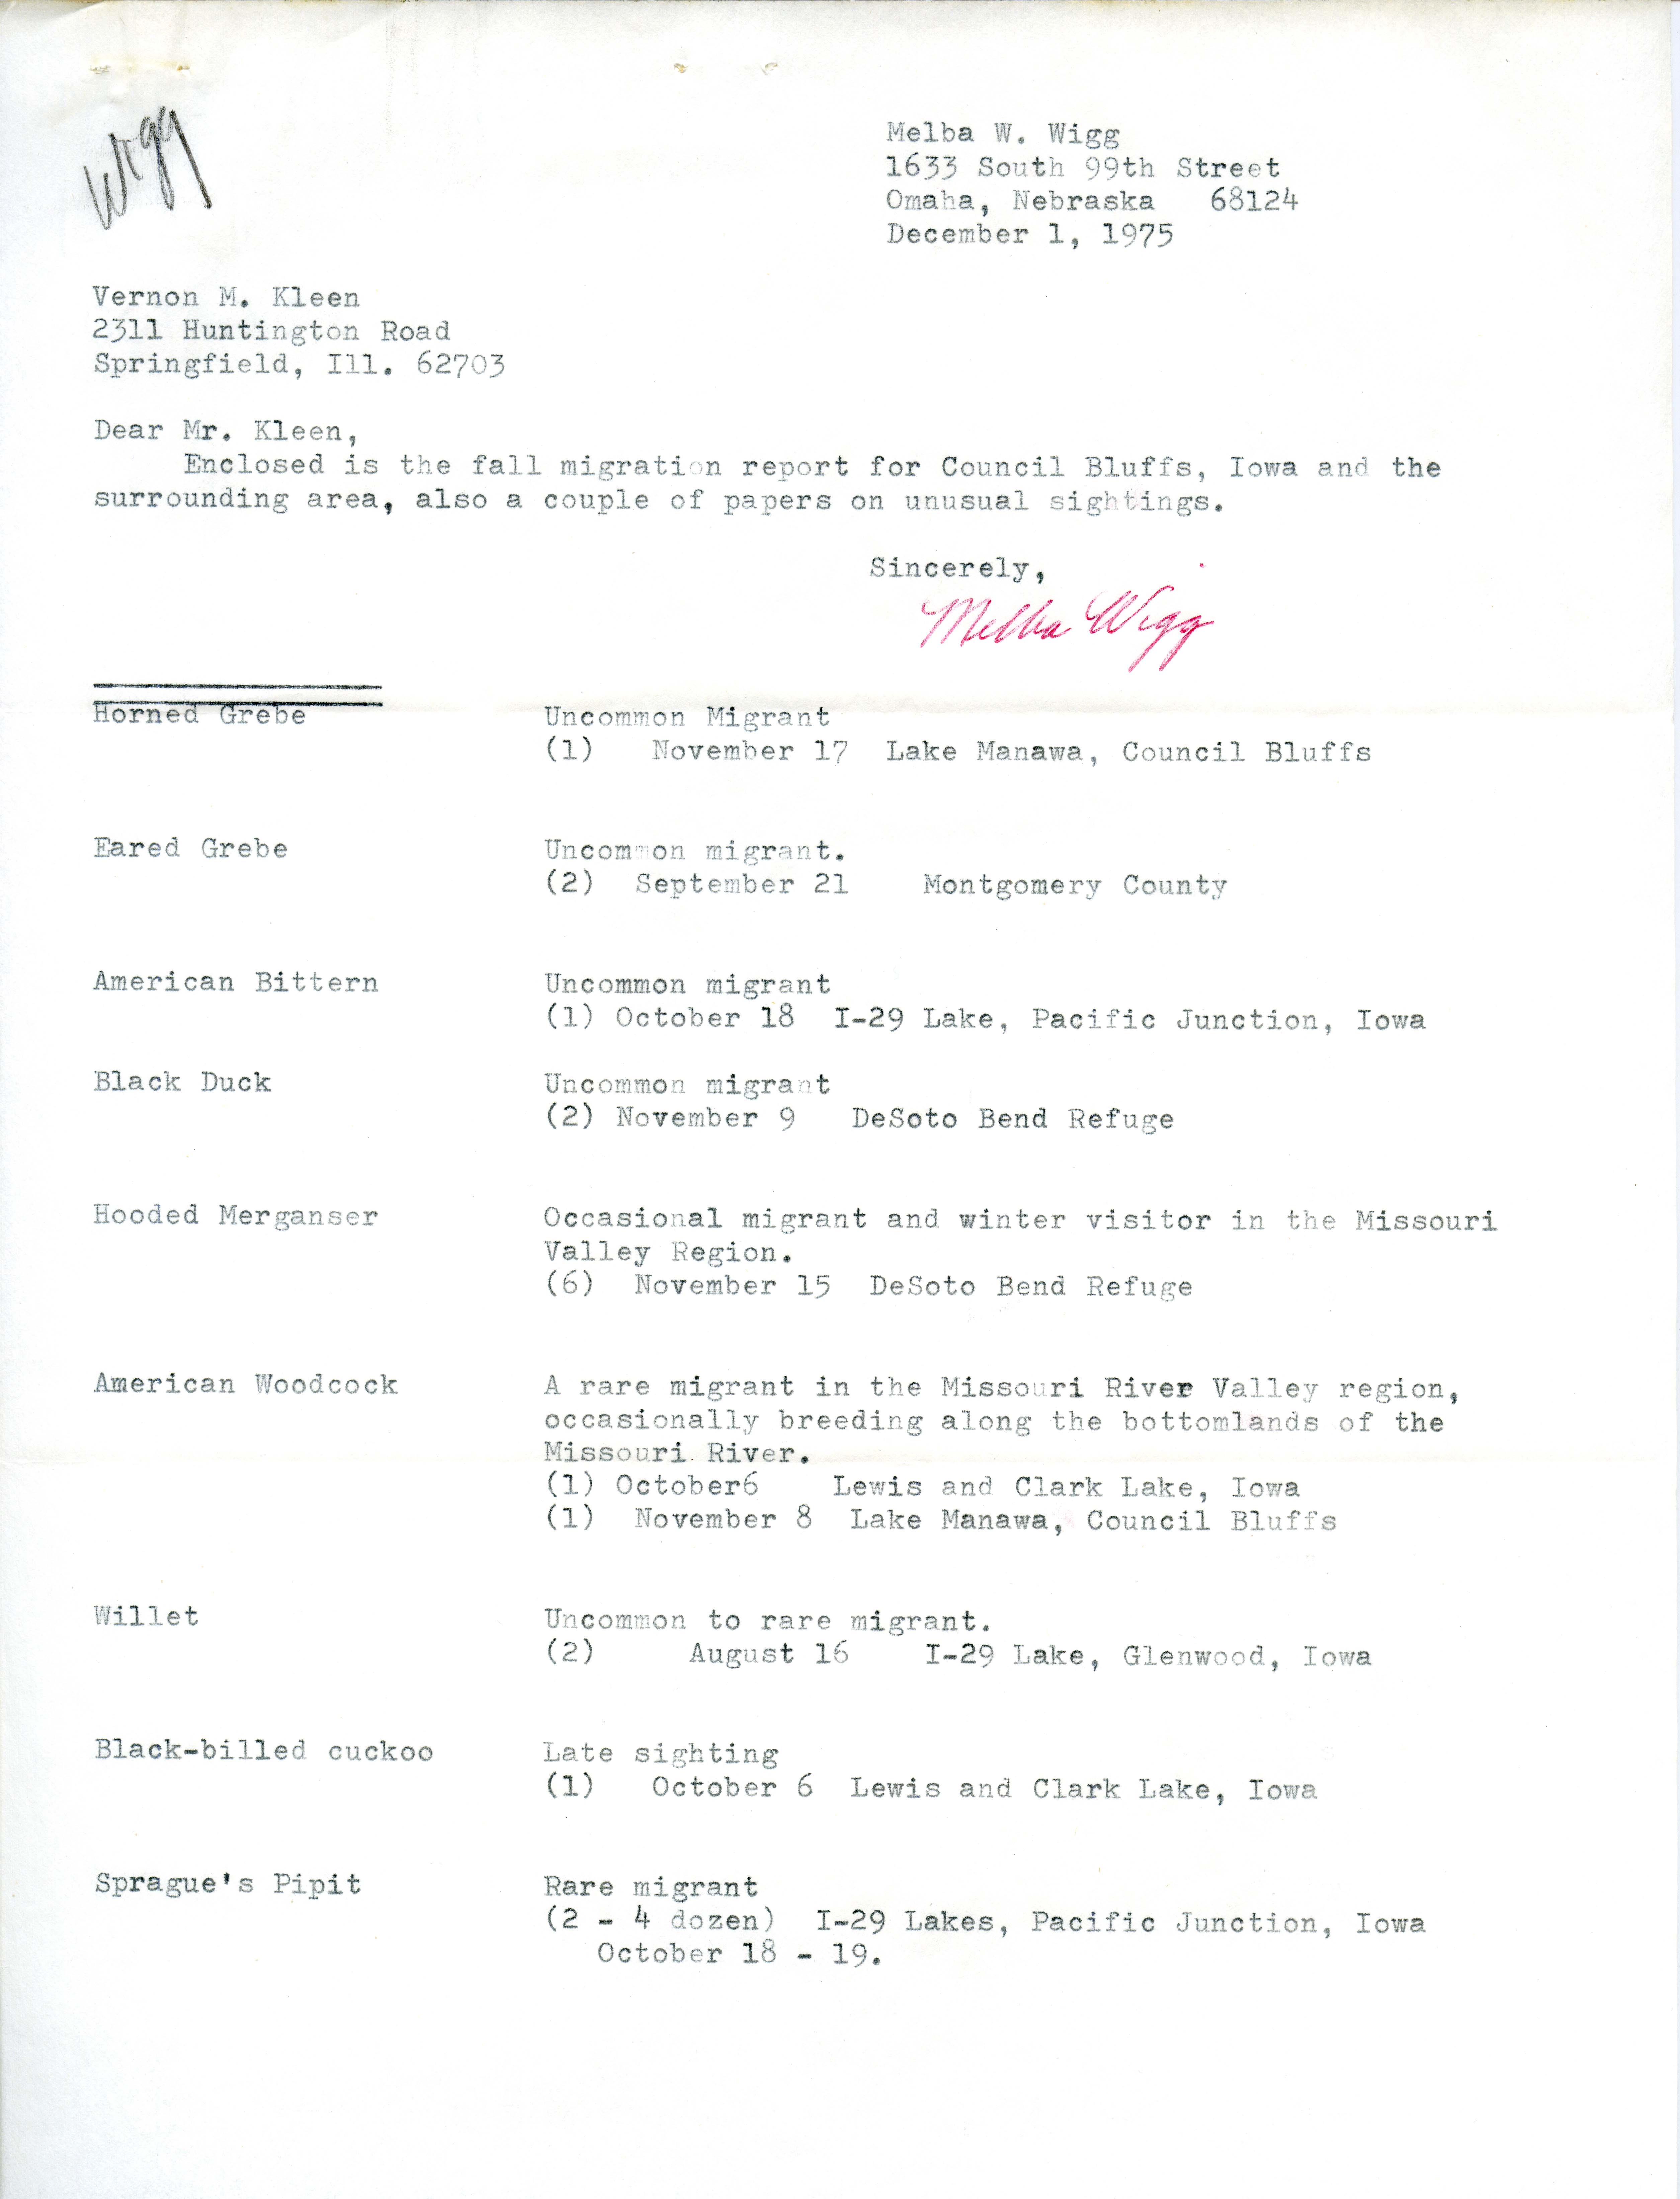 Melba Wigg letter and report to Vernon M. Kleen regarding 1975 fall migration around Council Bluffs Iowa, December 1, 1975